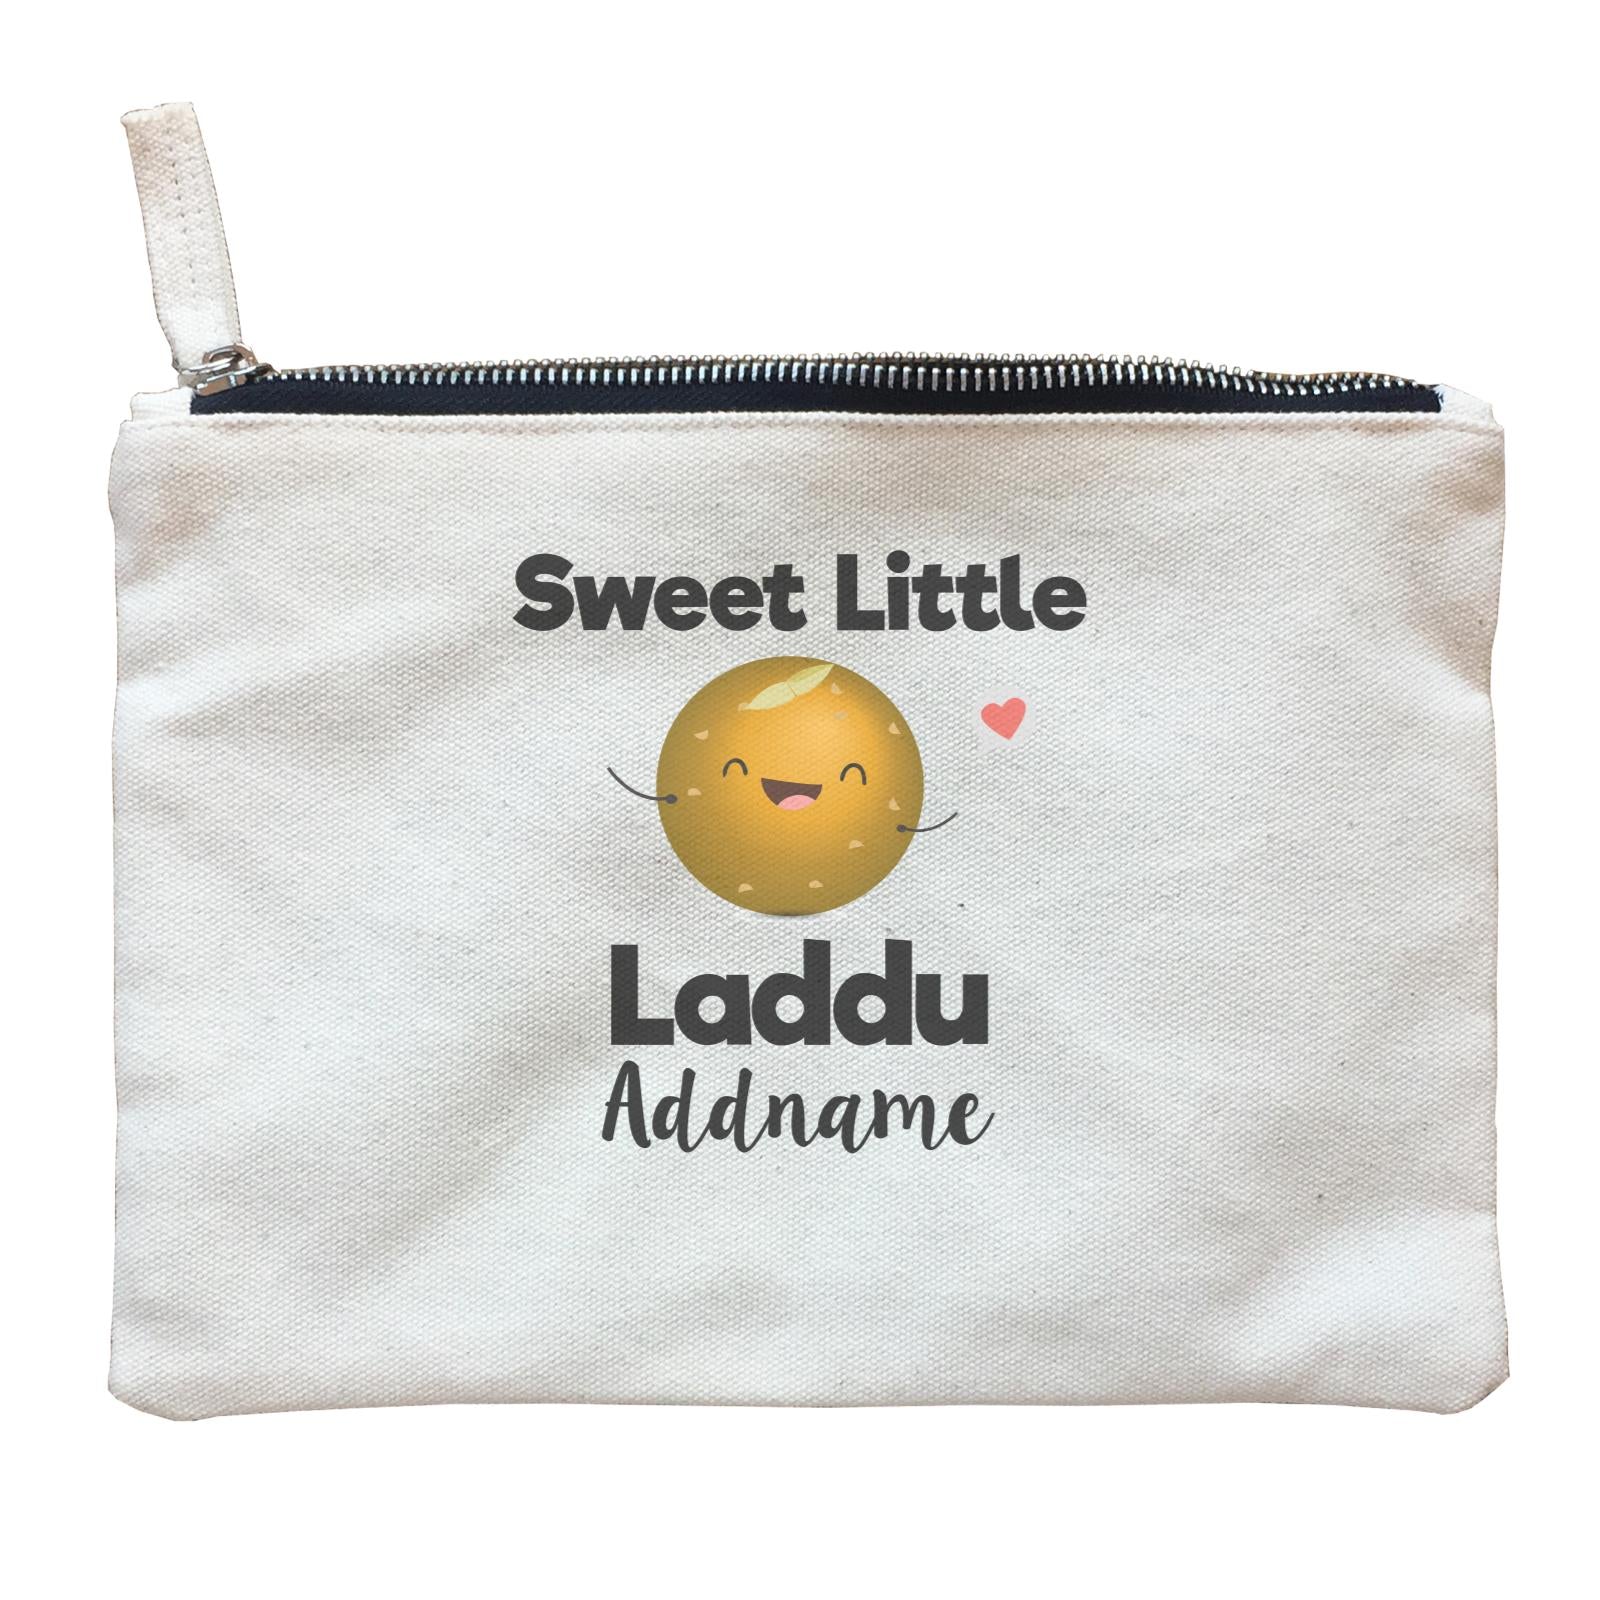 Sweet Little Laddu Addname Zipper Pouch